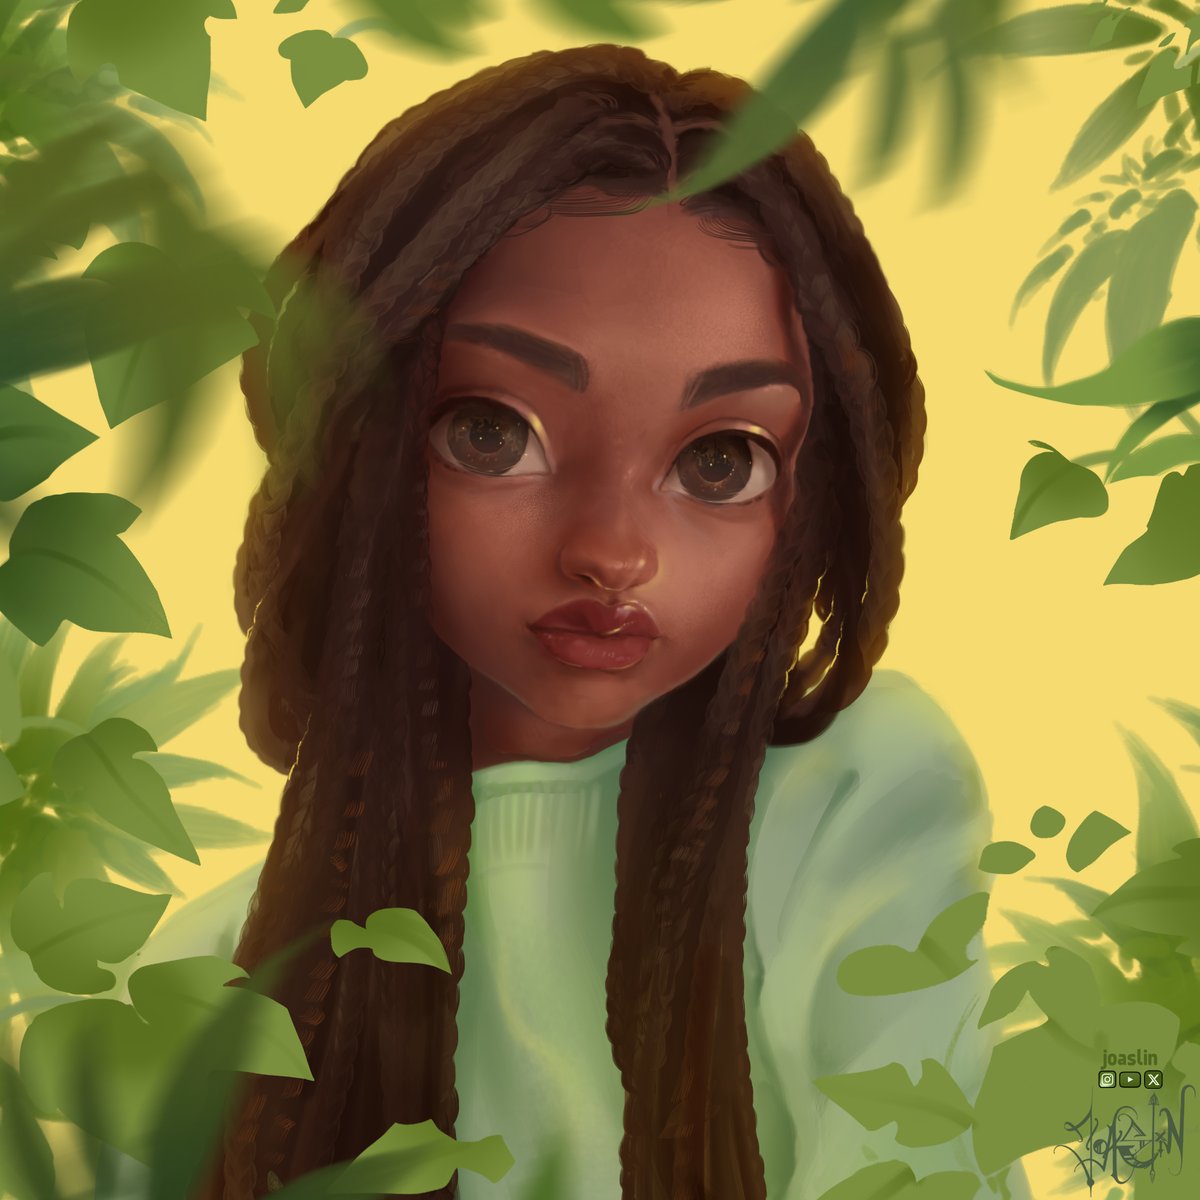 🌿 Green 🍃
Some braids and some Foliage, a nature themed portrait.

#green #braids #digitalart #boxbraids #plants #portrait #illustration #procreate #photoshop #cute #blackgirl #jungle #melanin #painting